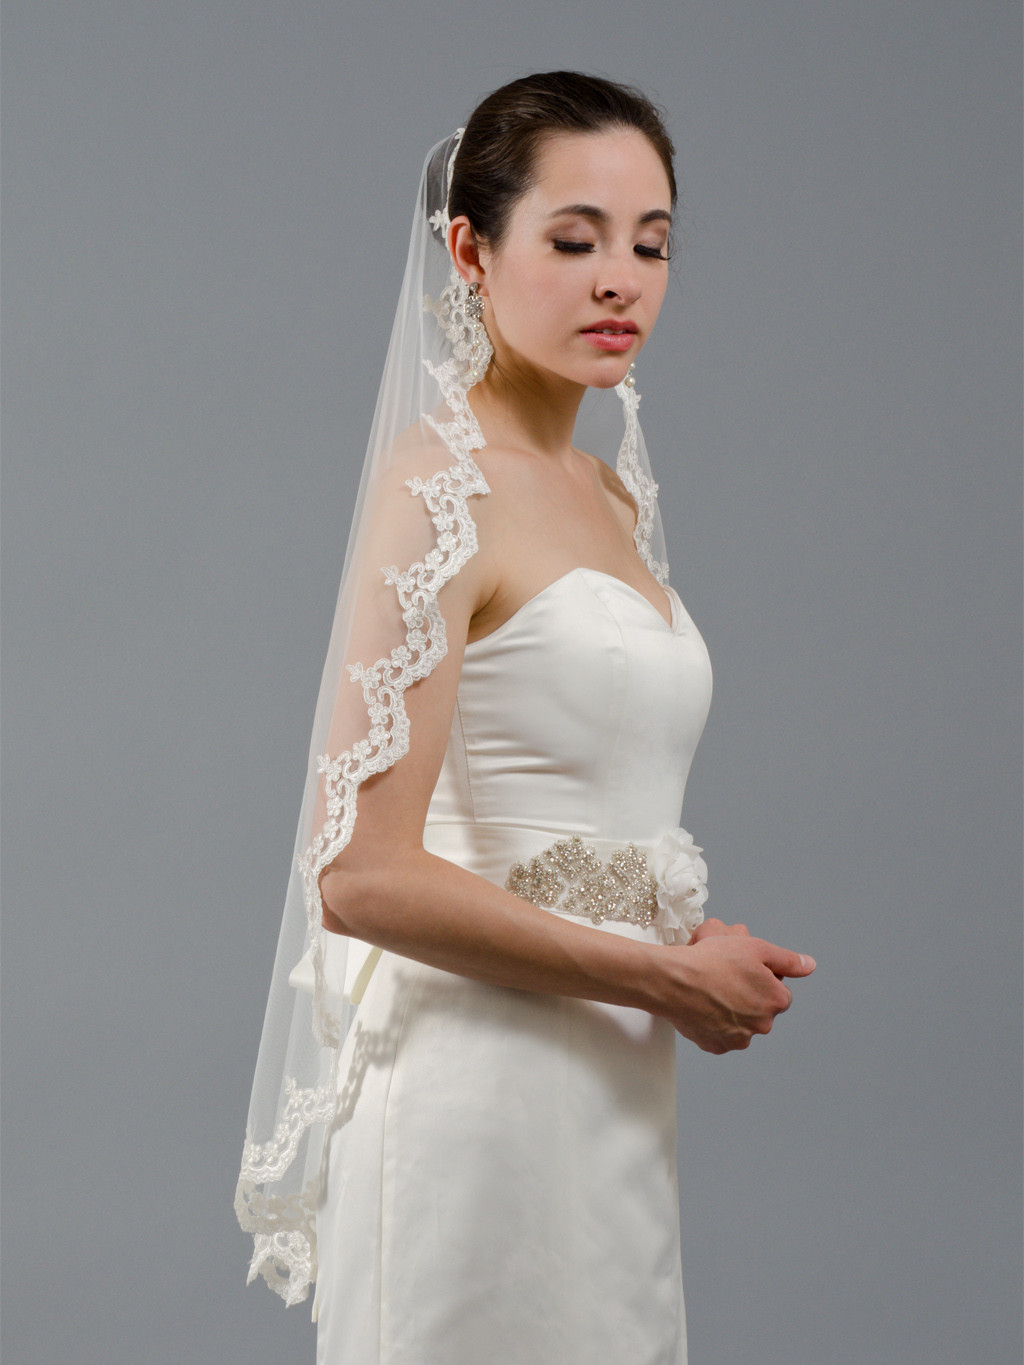 Mantilla Veil Wedding
 Bridal Mantilla veil alencon lace V040 white ivory